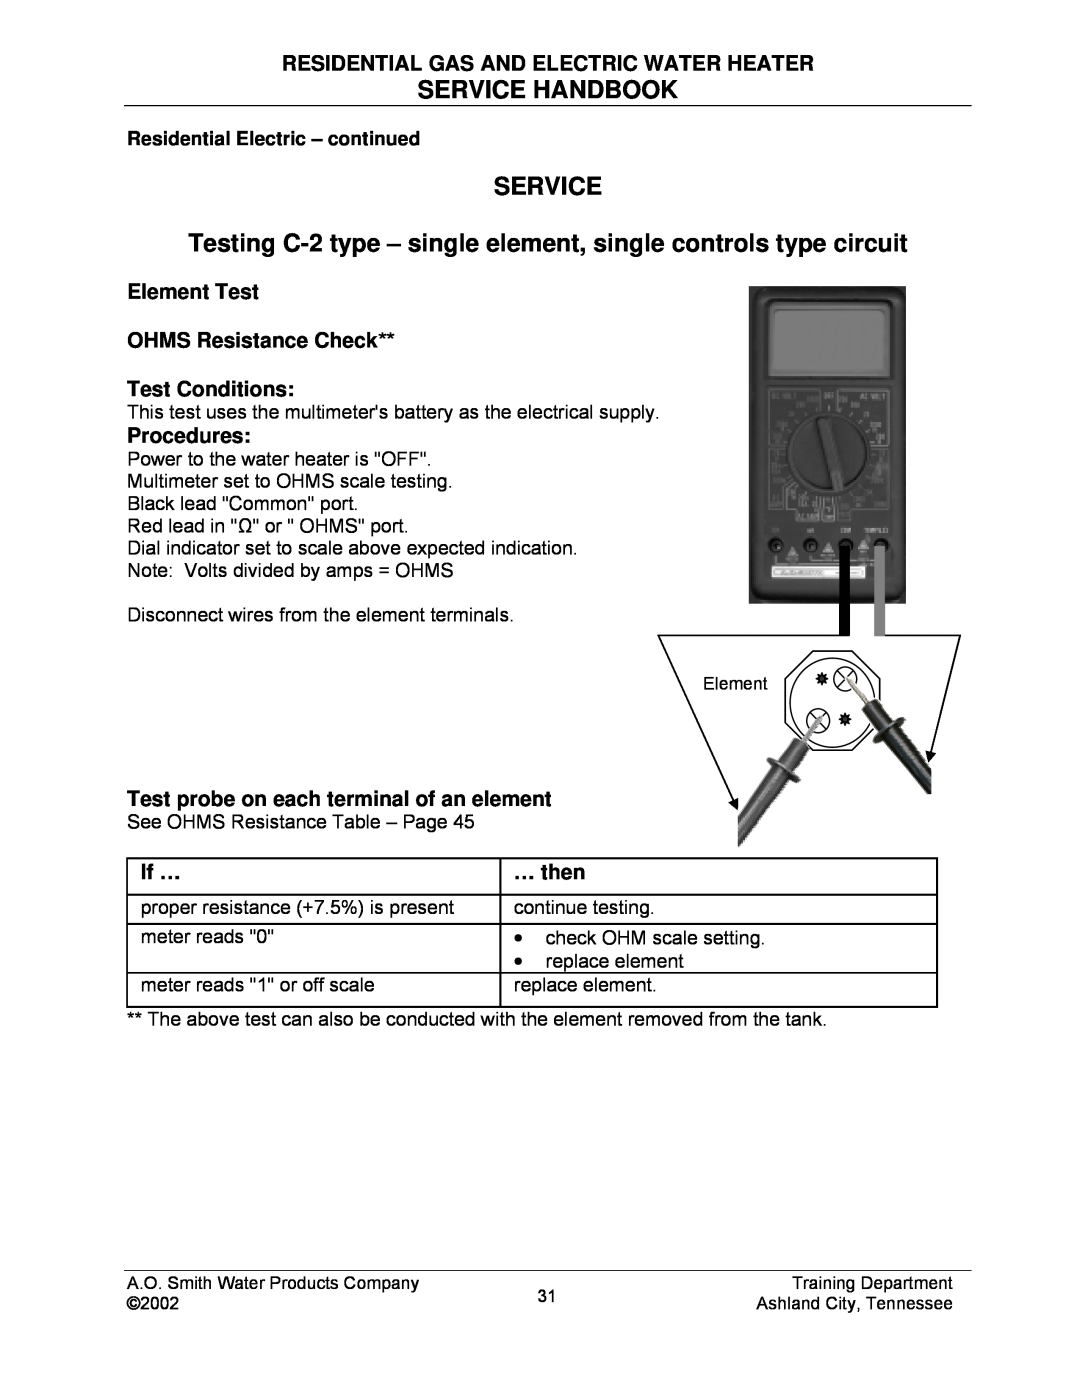 A.O. Smith TC-049-R2 Testing C-2 type - single element, single controls type circuit, Service Handbook, Procedures 